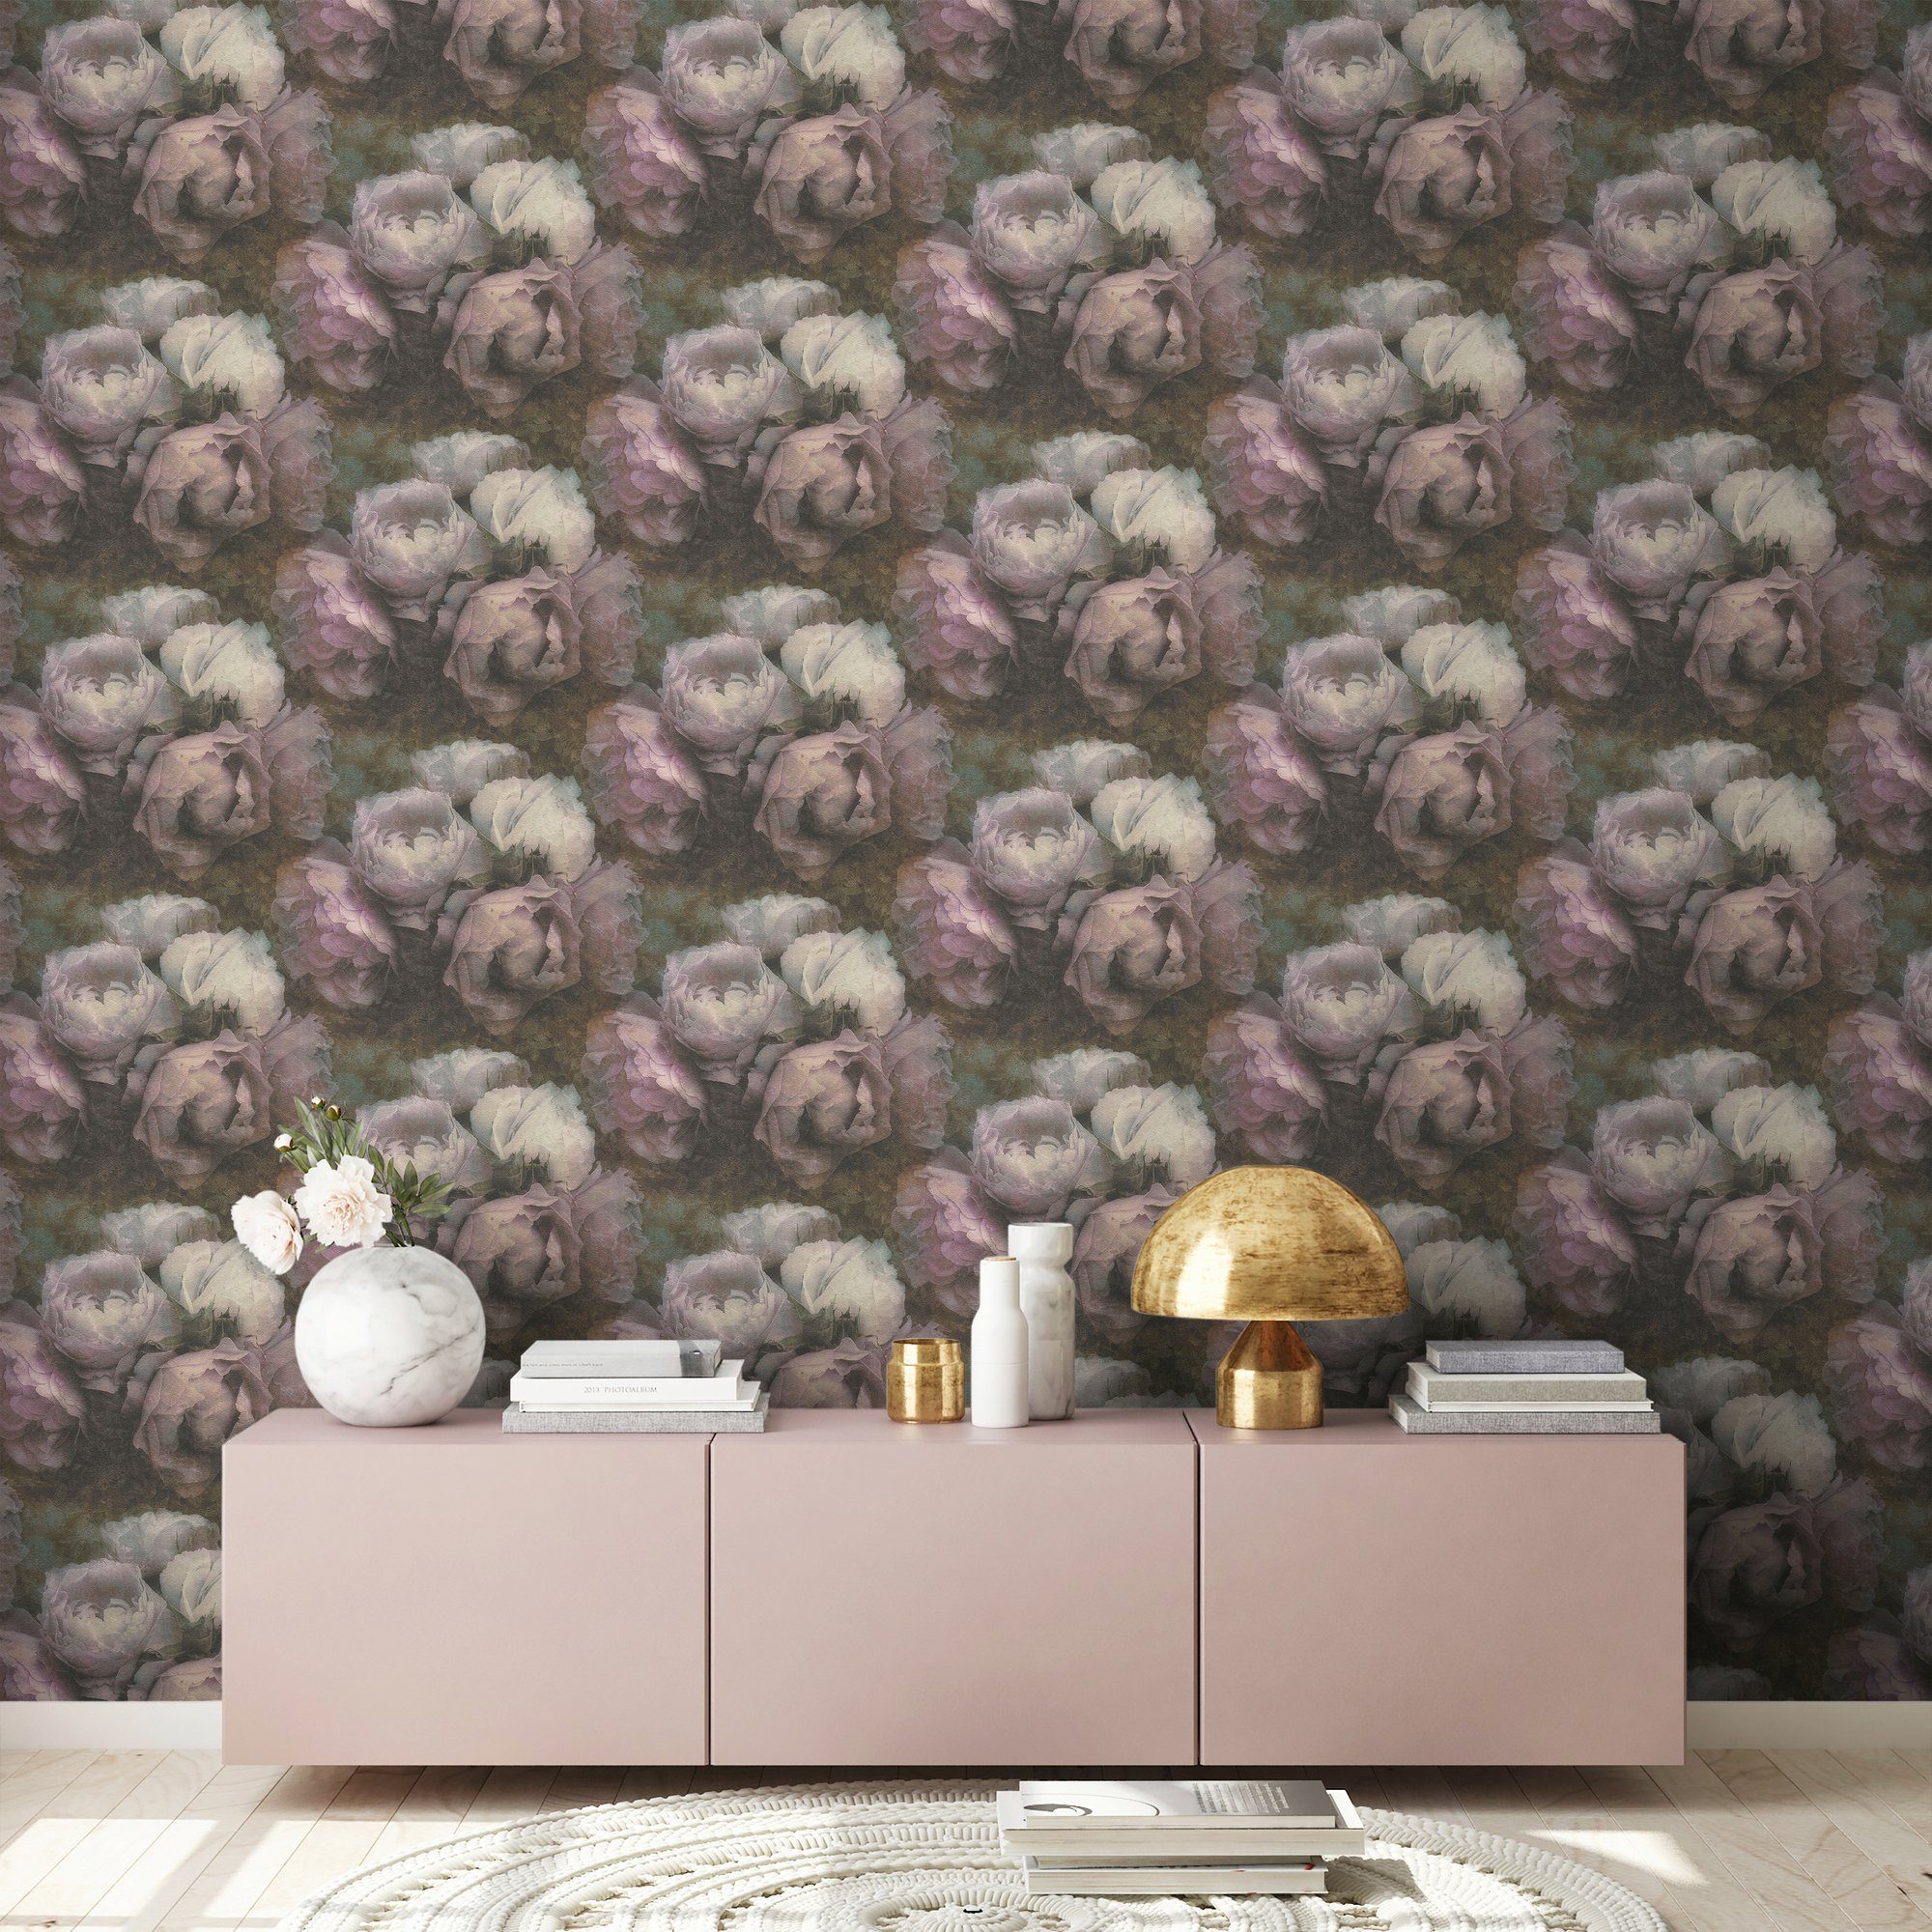 Romantic New Vliestapete Rosen, floral, Tapete walls romantischen Dream Walls lila/grau living Blumen mit